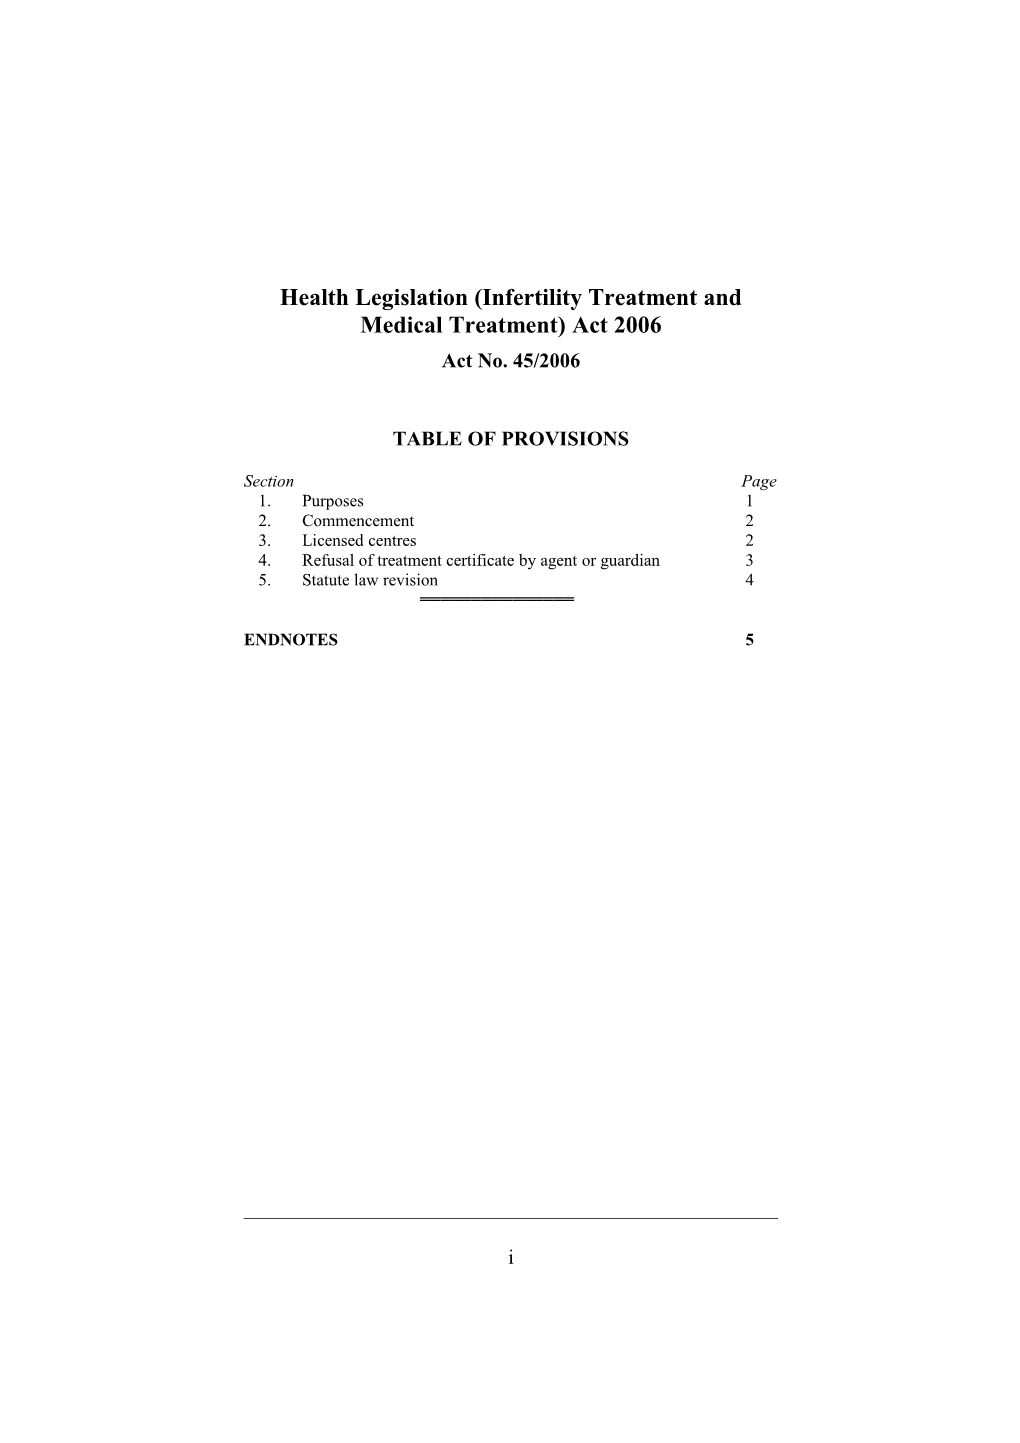 Health Legislation (Infertility Treatment and Medical Treatment) Act 2006